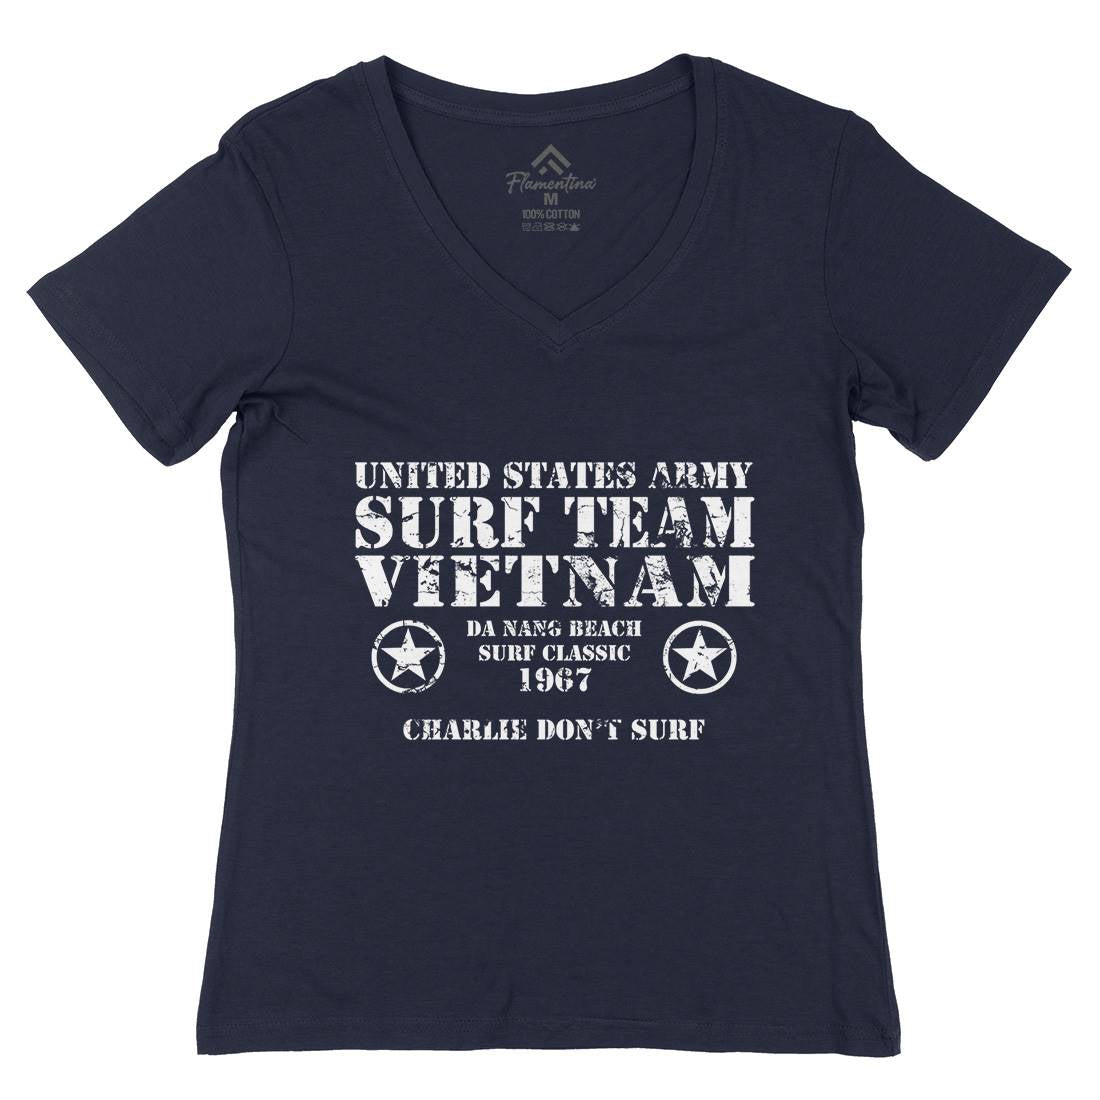 Surf Team Vietnam Womens Organic V-Neck T-Shirt Army D438